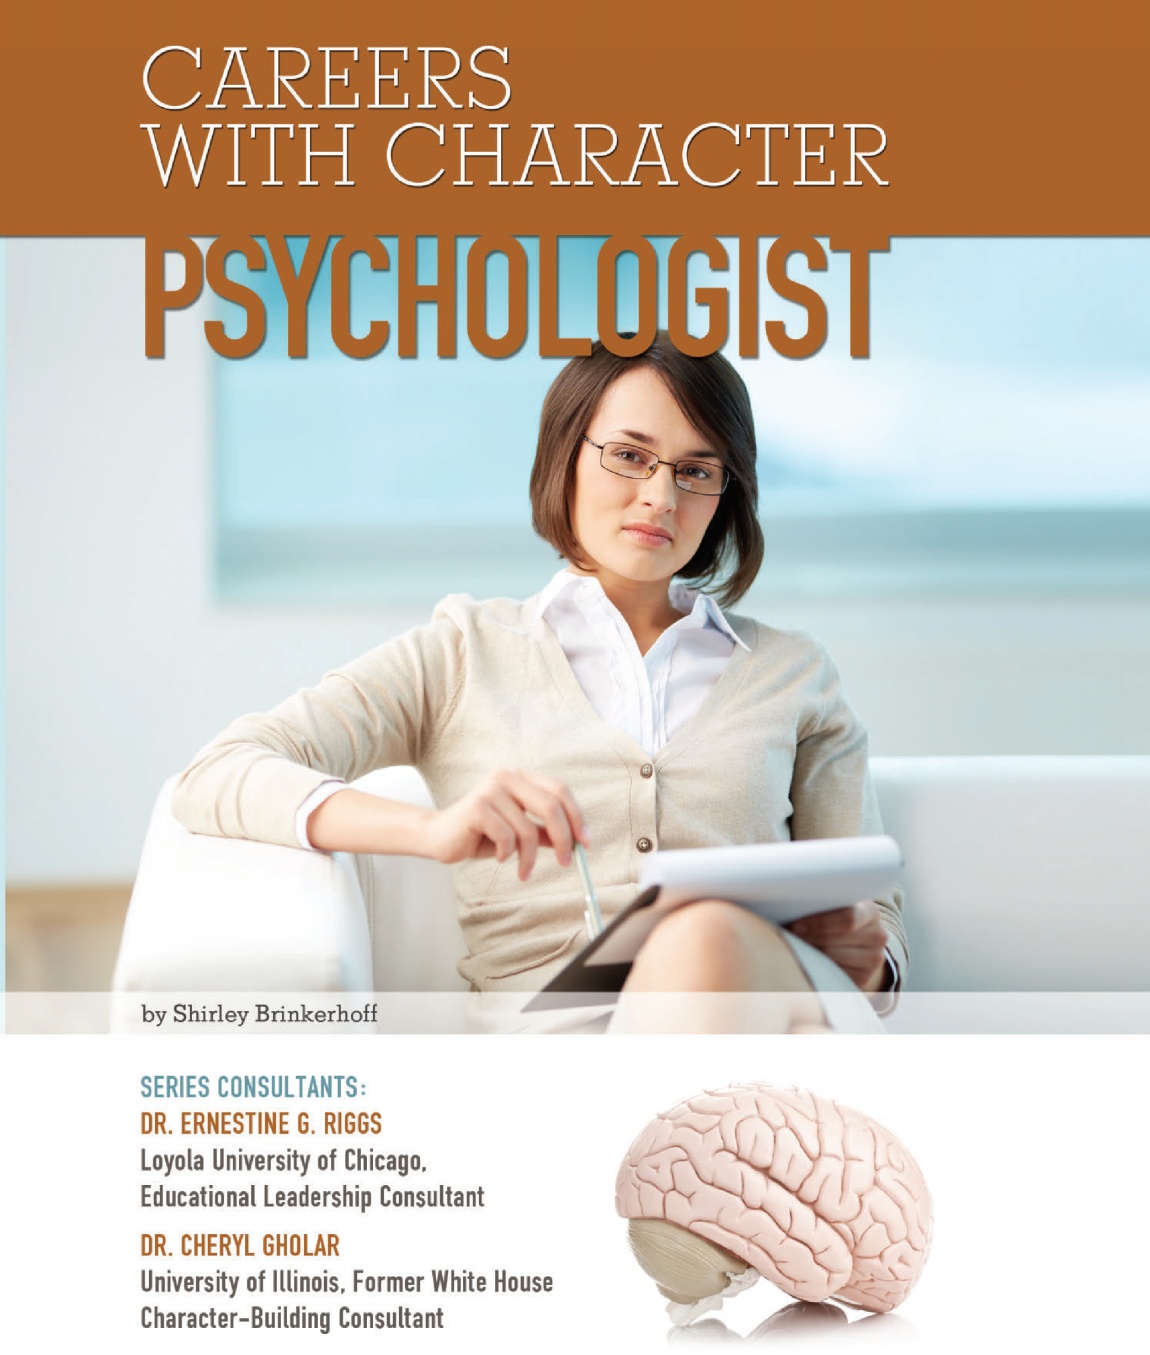 psychologist-01.png